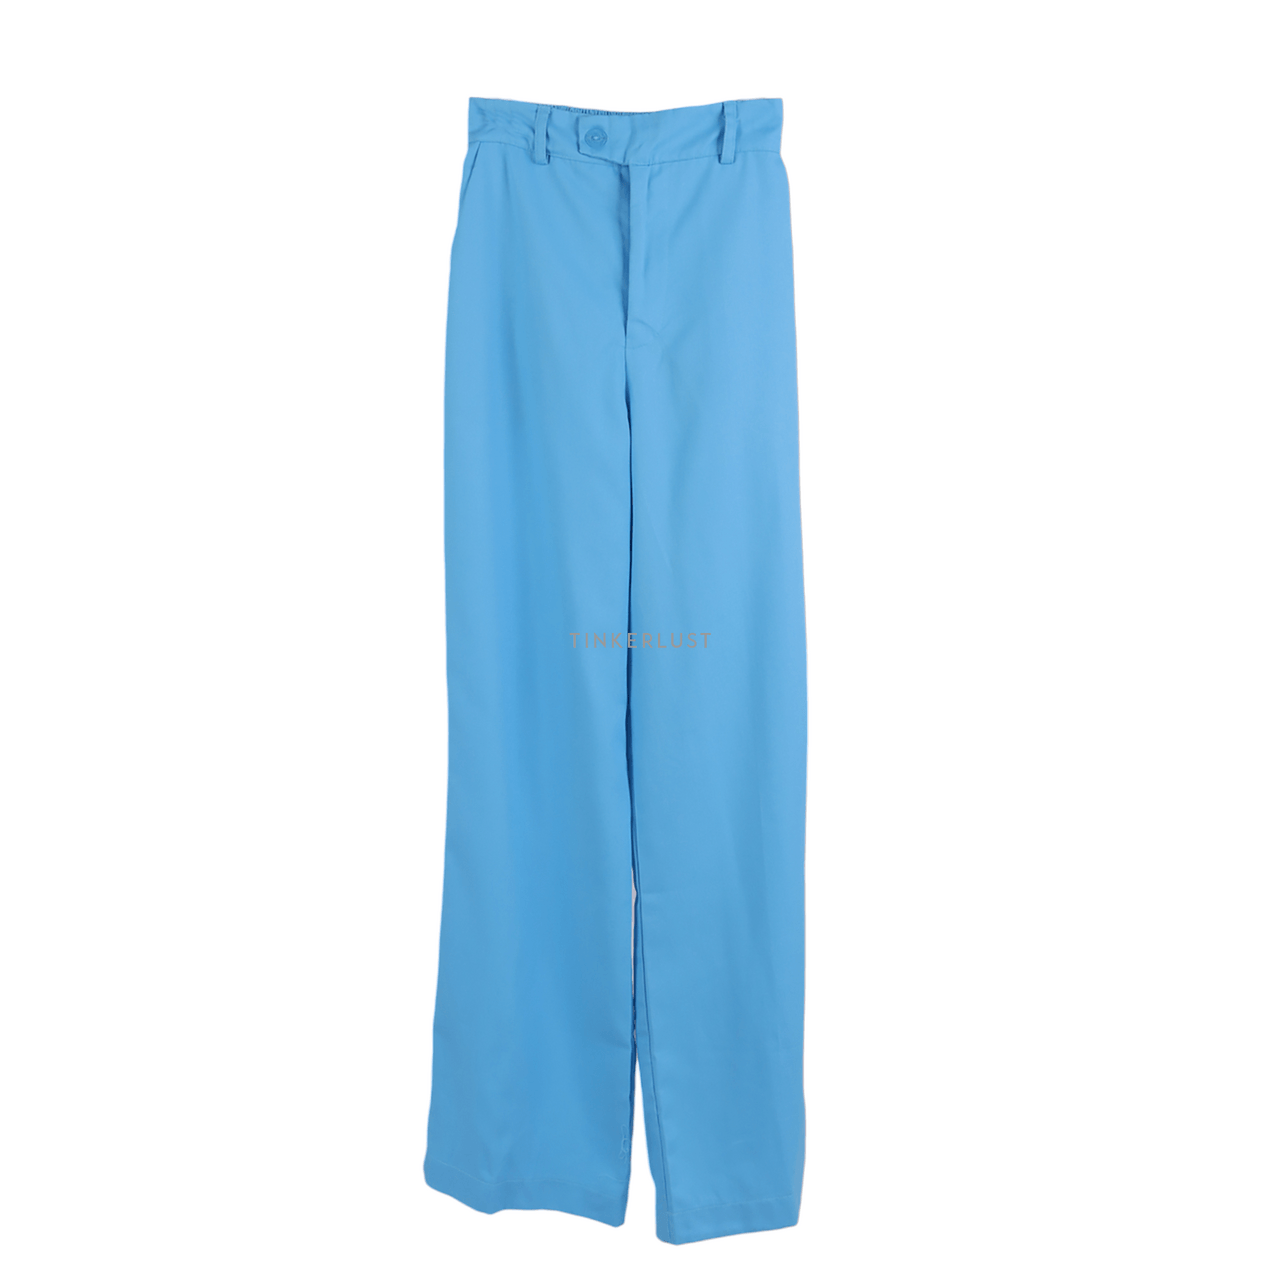 AVGAL Blue Long Pants